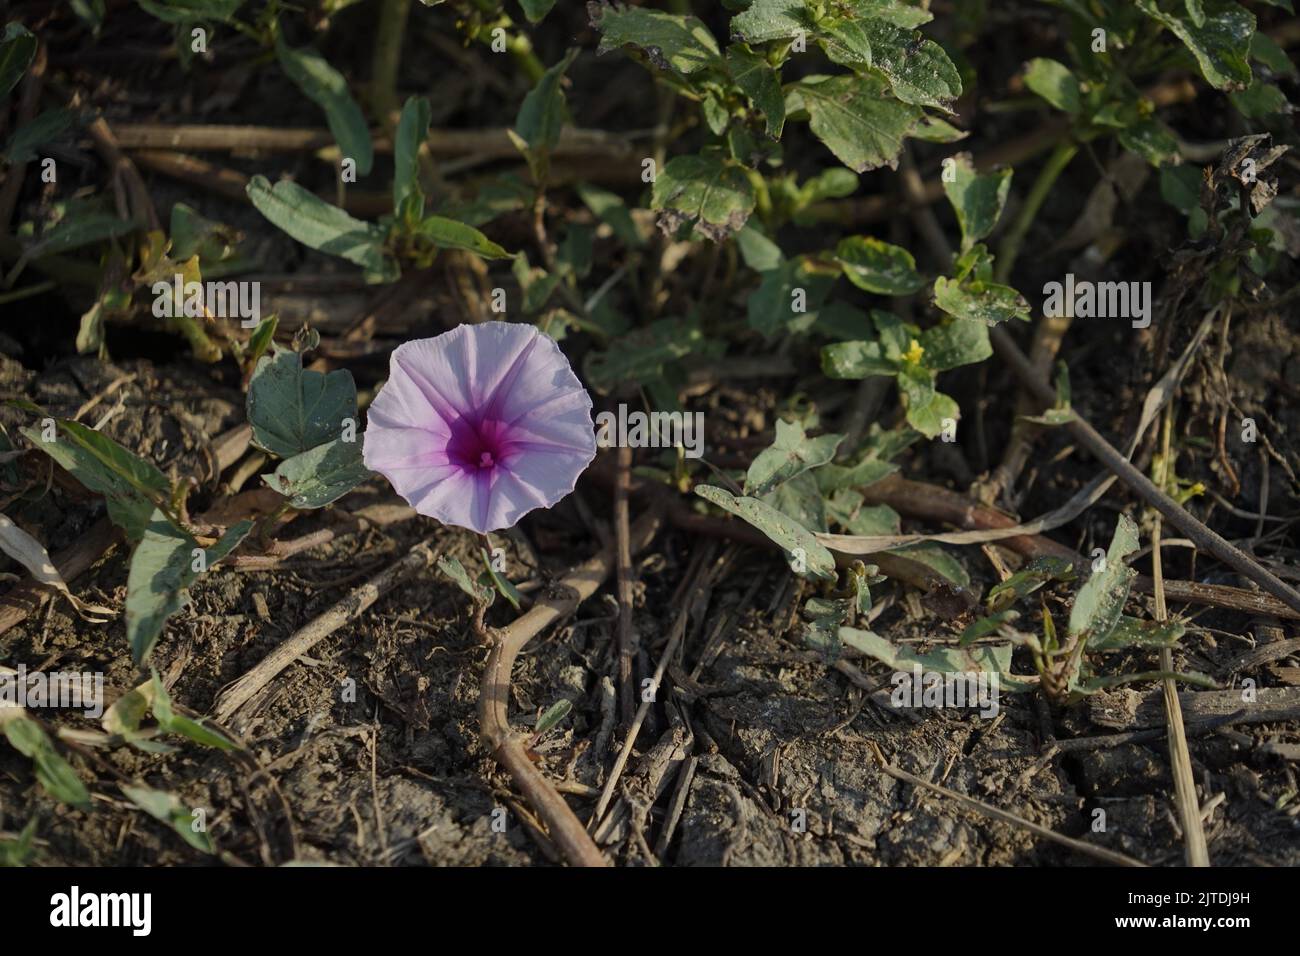 Flor de batata fotografías e imágenes de alta resolución - Alamy